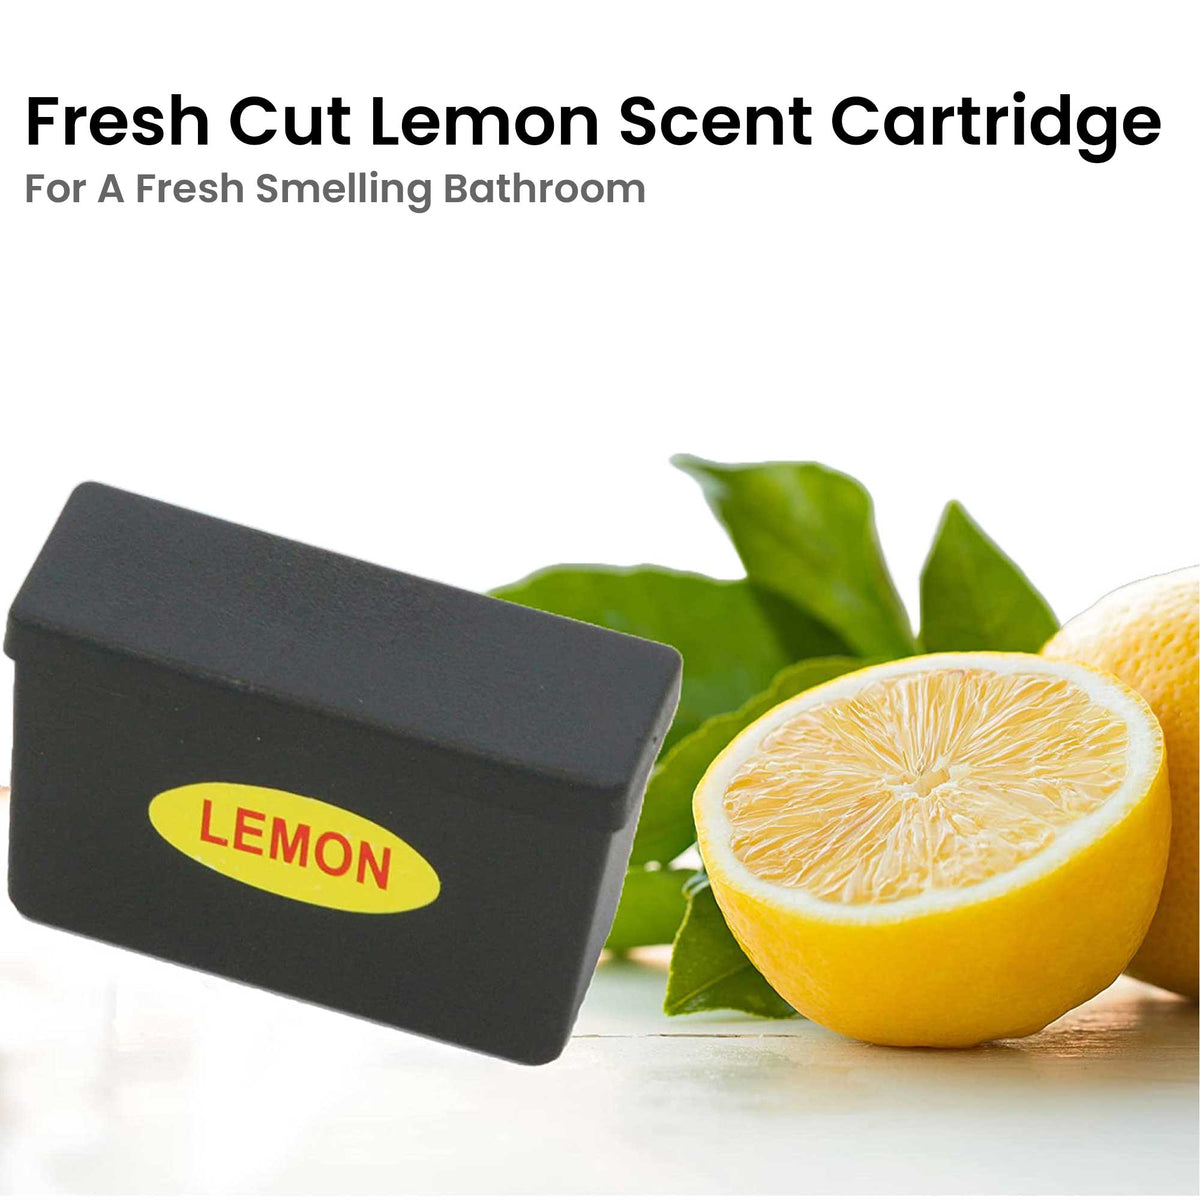 4 Gallon / 15 Liter Sensor Bathroom Trash Can with Odor Filter and Lemon Fragrance for a fresh smelling bathroom